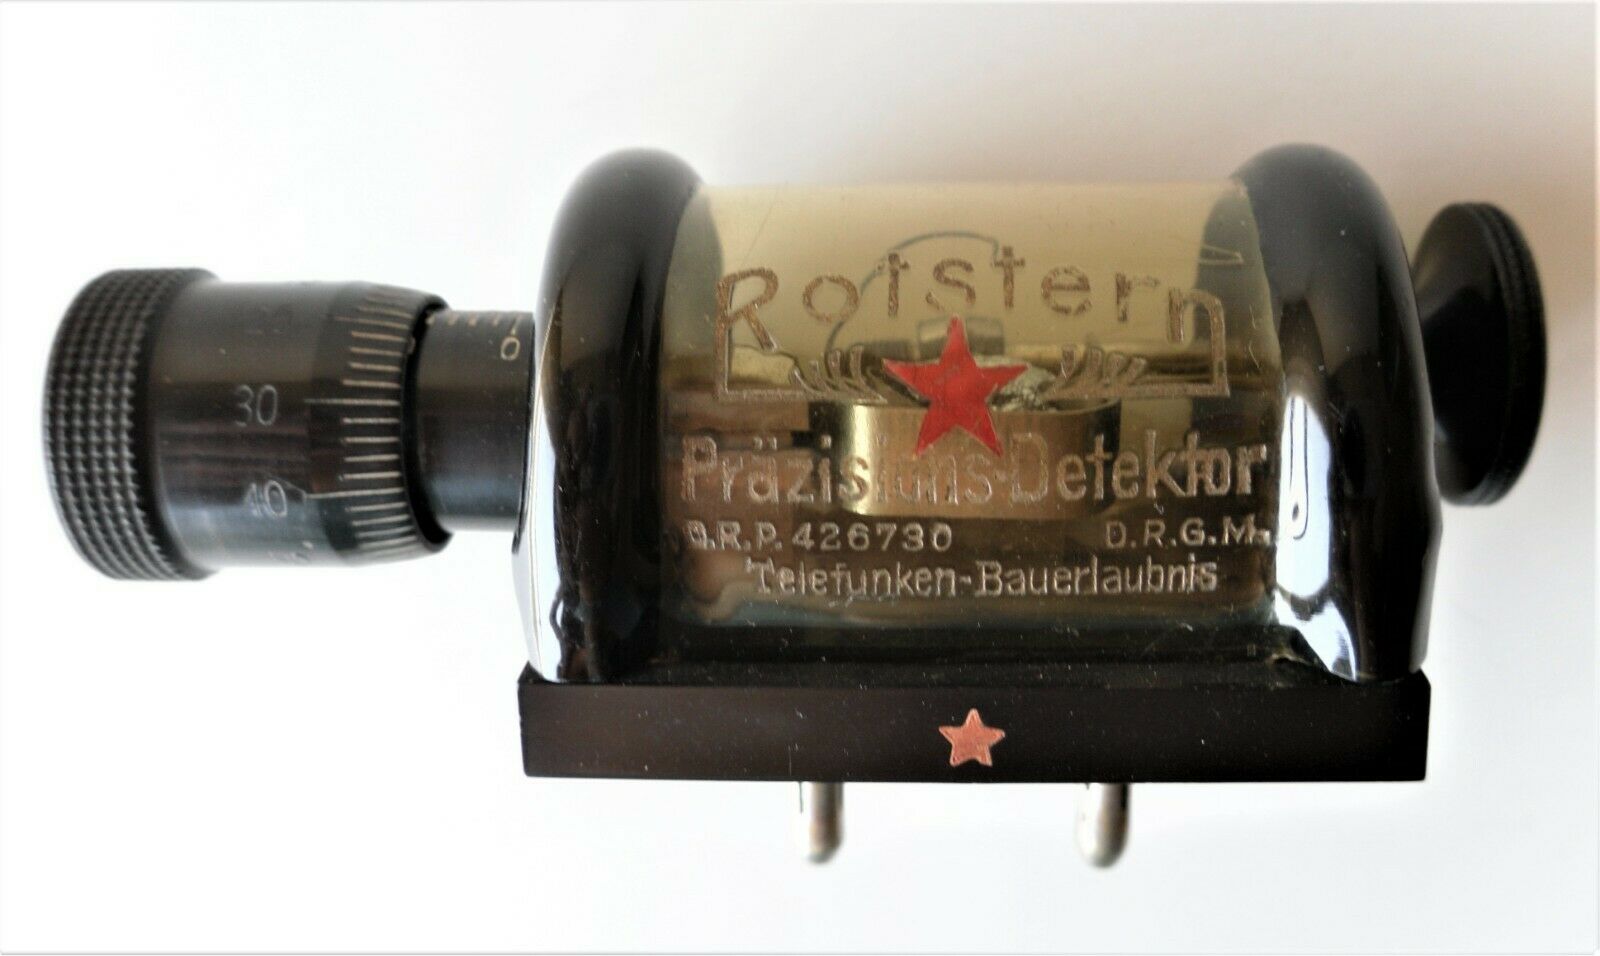 Very Rare German Crystal Detector "rotstern" (red Star) 1926